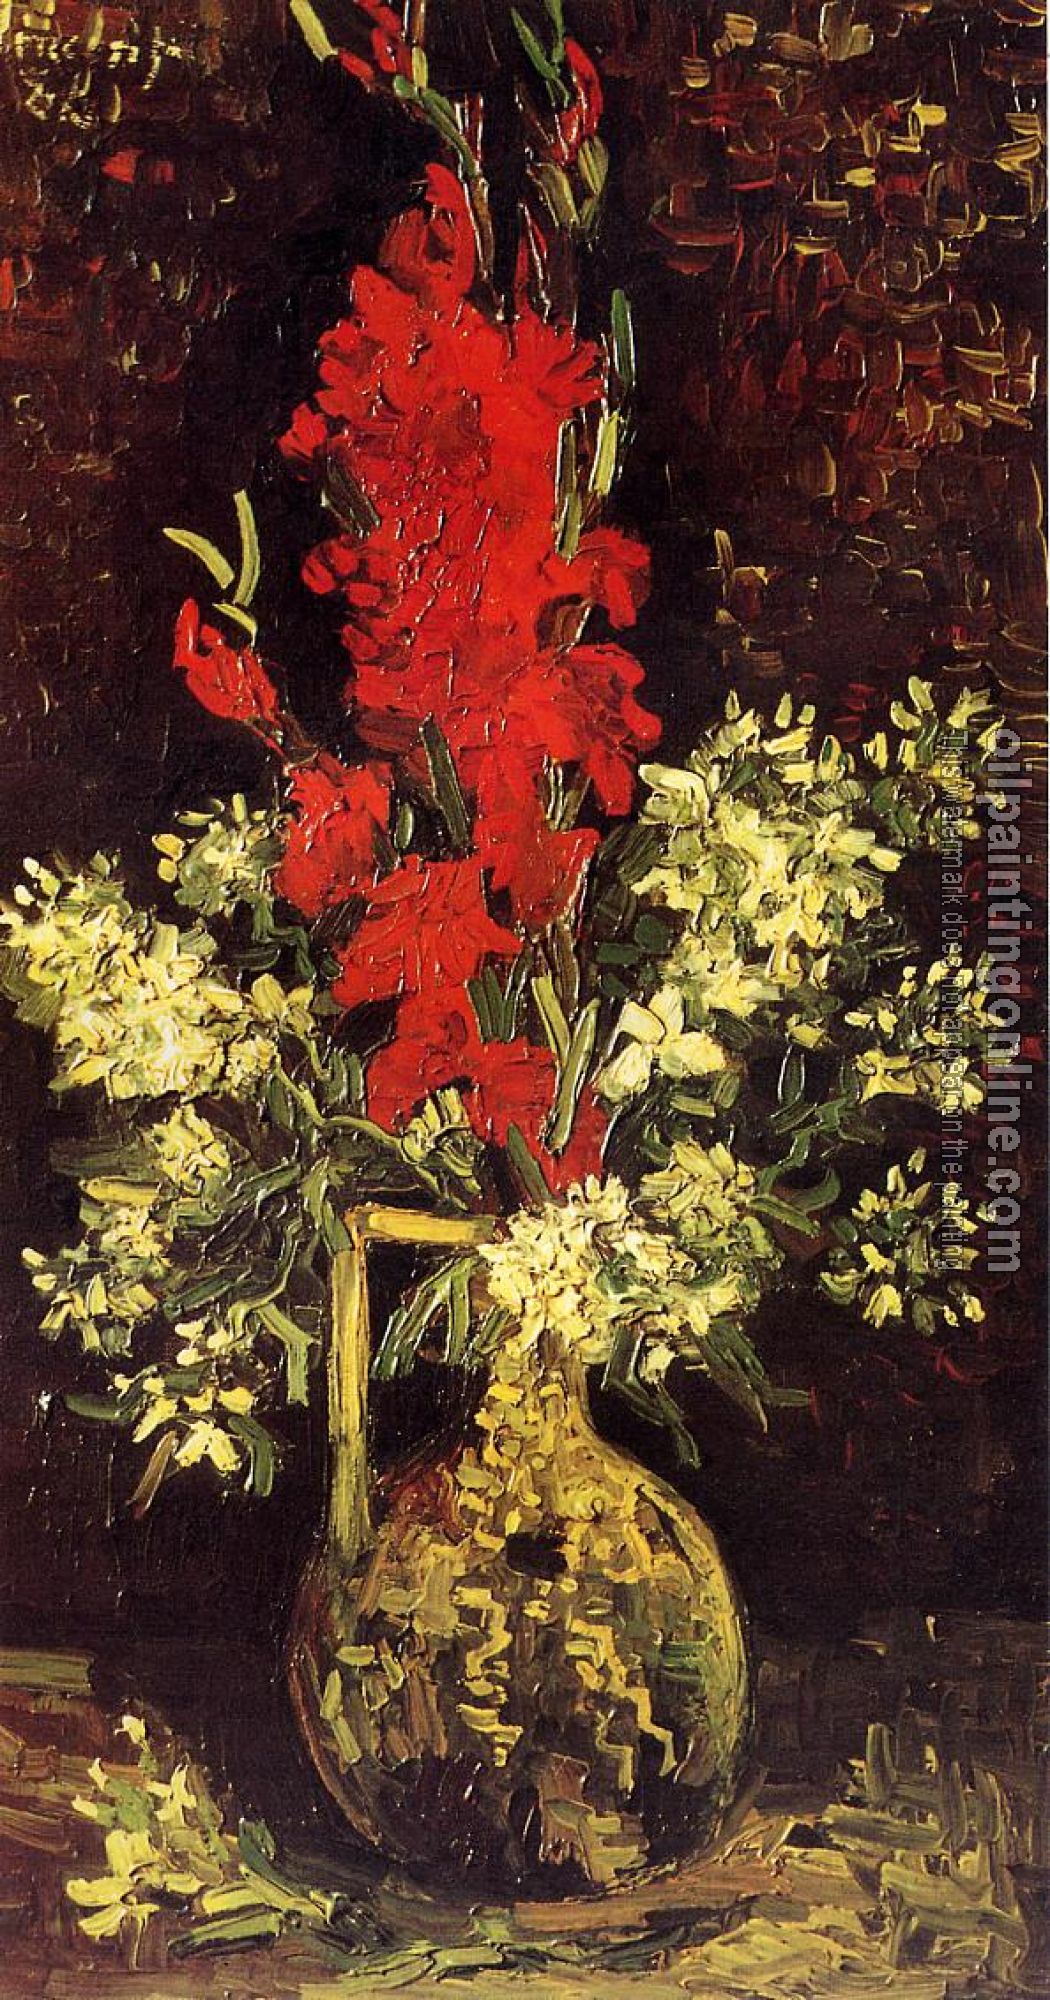 Gogh, Vincent van - Vase with Gladioli and Carnations